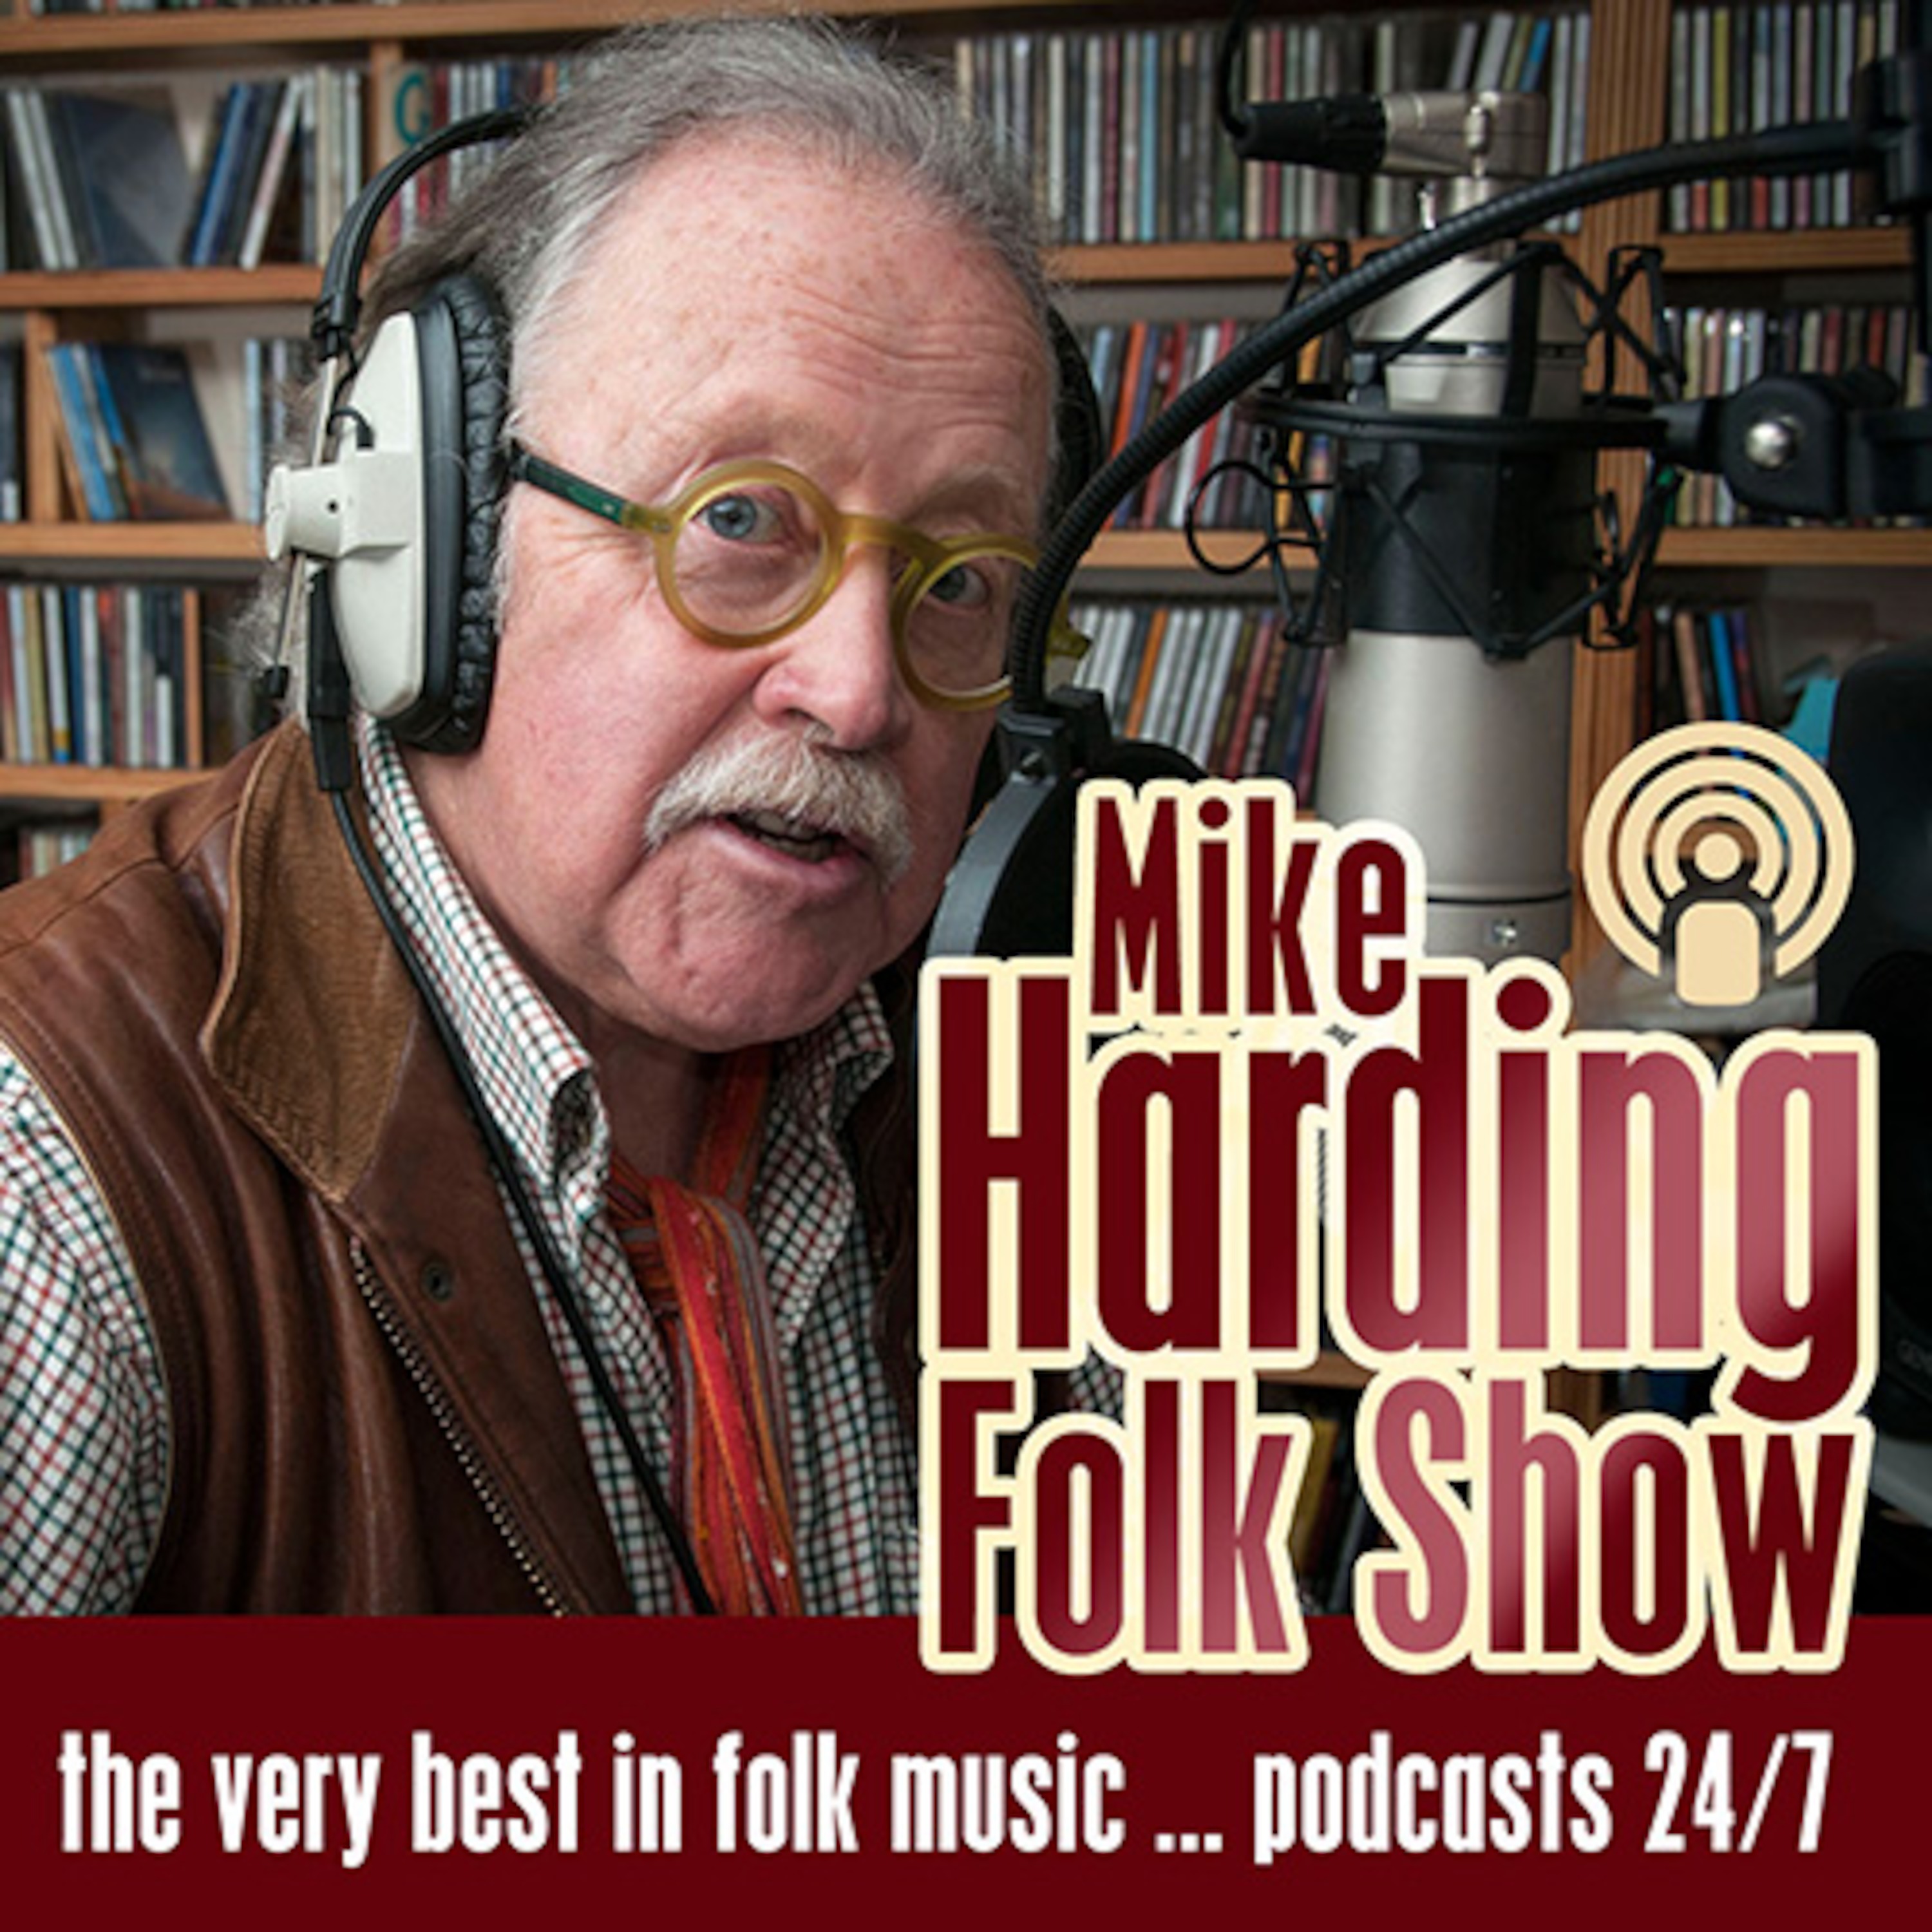 Mike Harding Folk Show 156